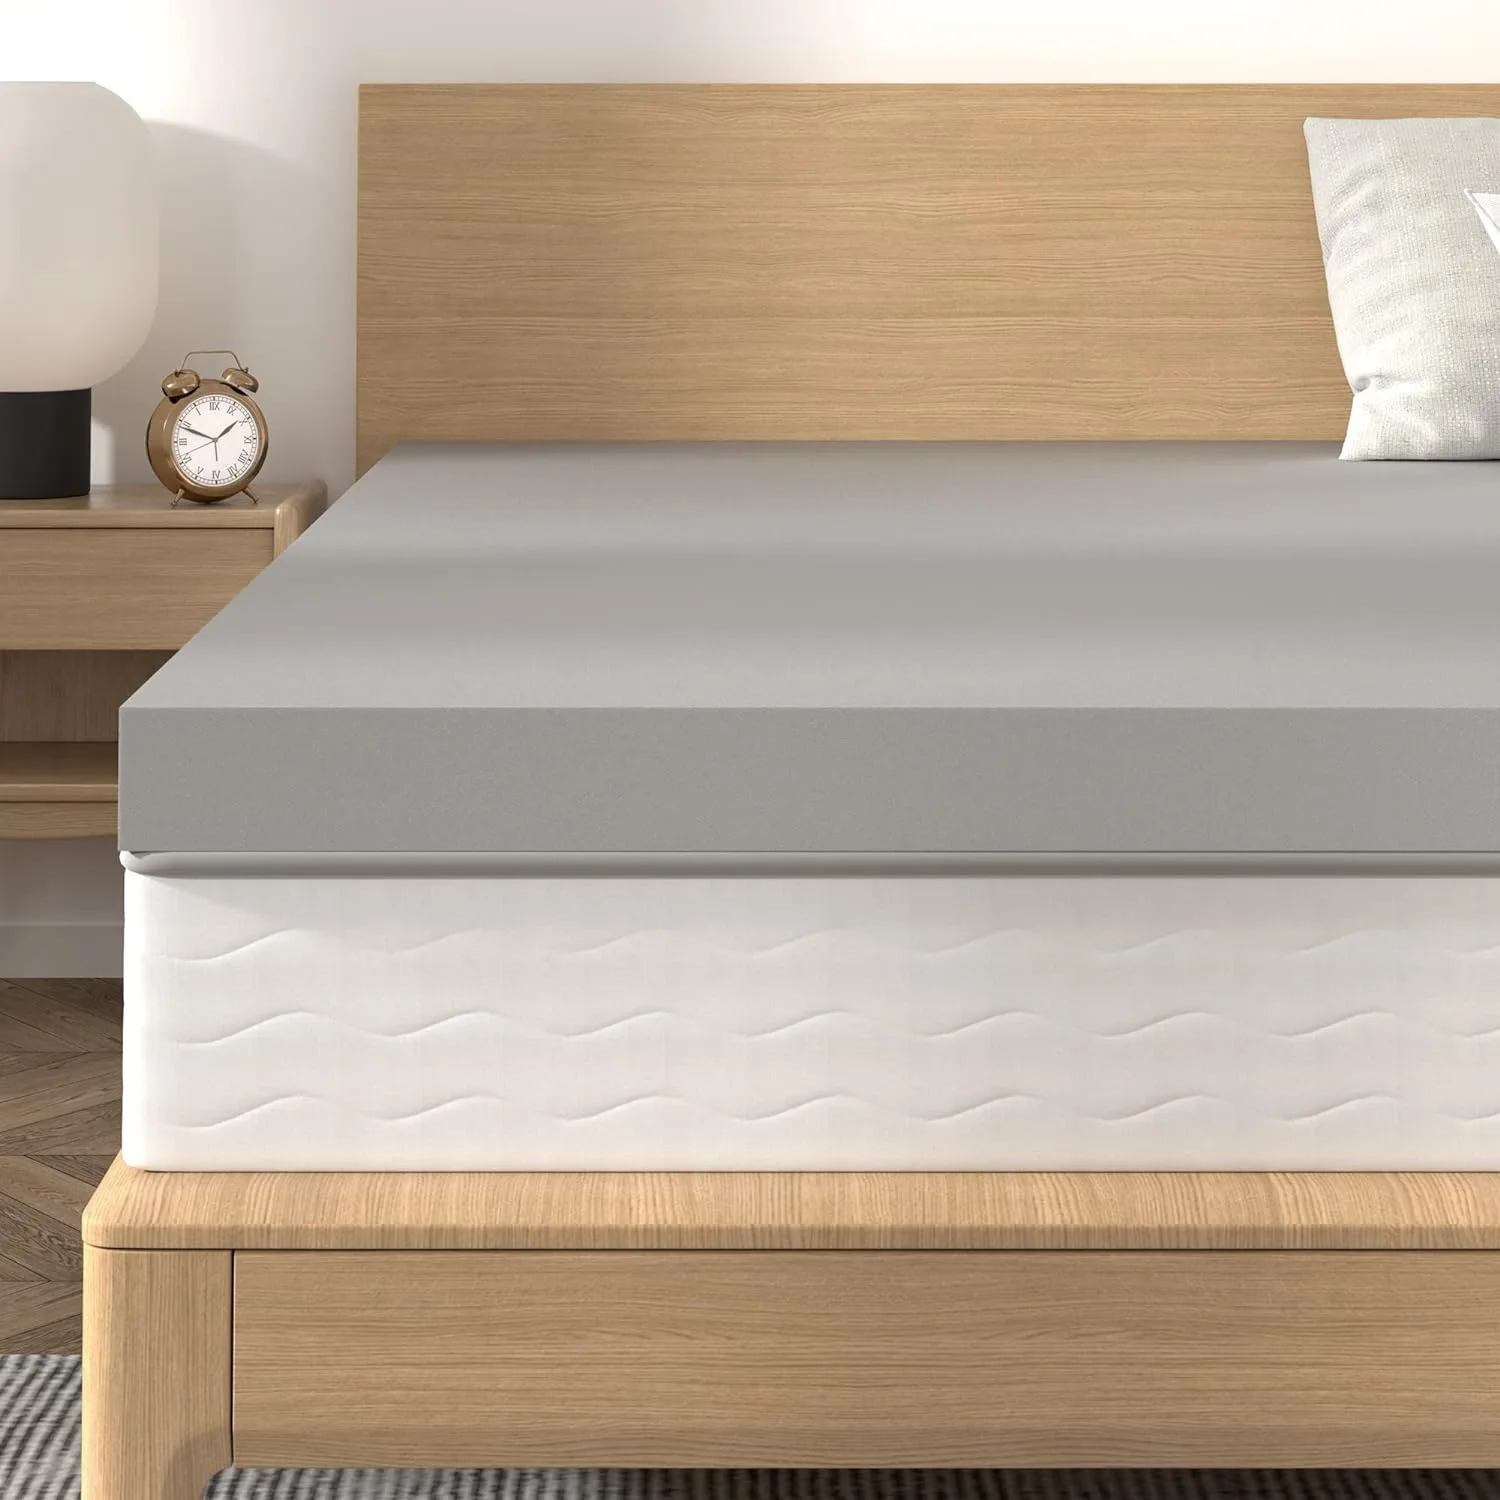 BedStory 2 Inch Full Size Memory Foam Mattress Topper Review